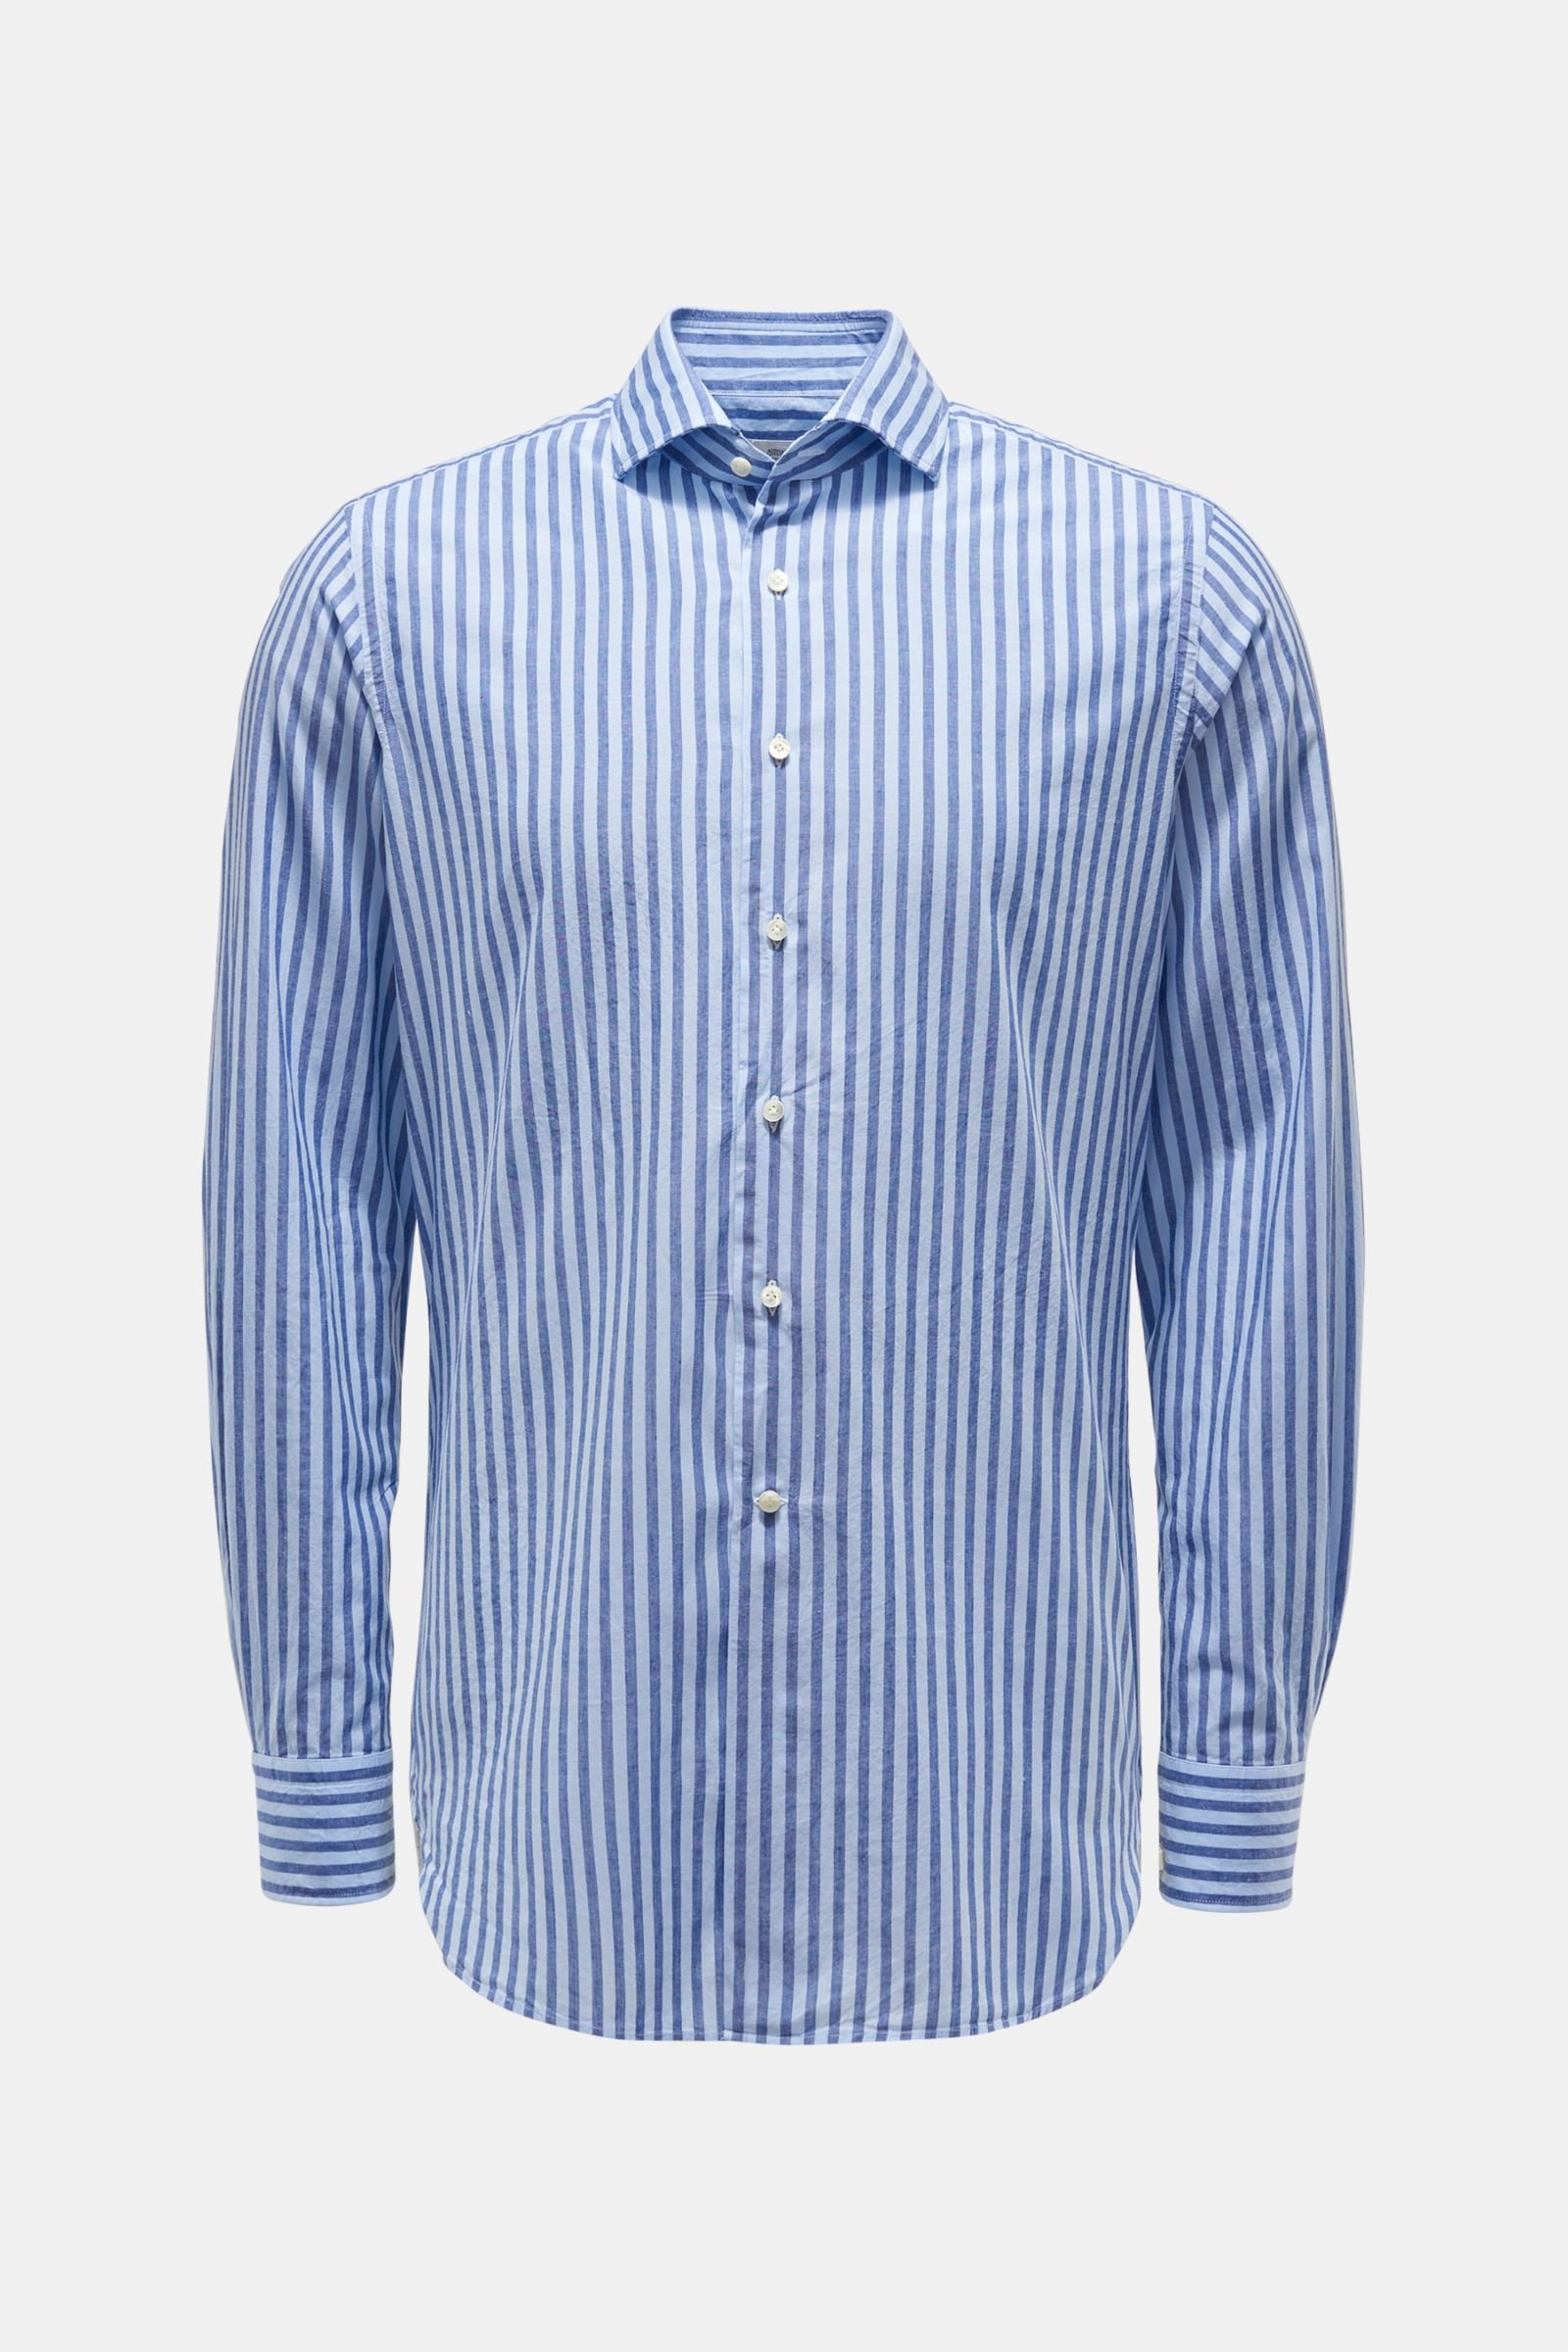 Casual shirt shark collar smoky blue/navy striped